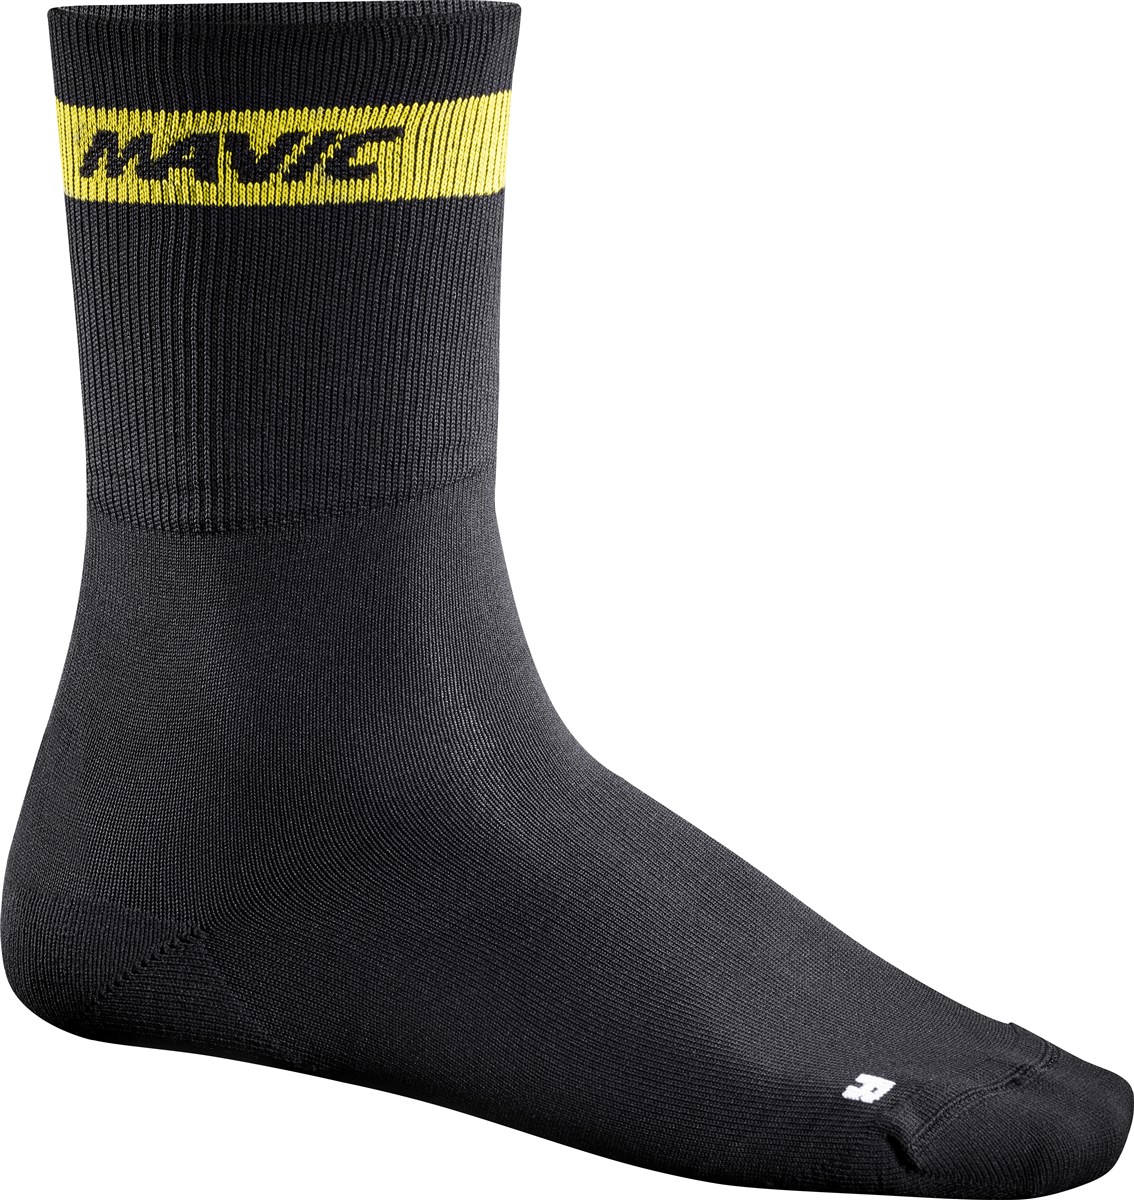 Mavic Crossmax High Cycling Socks SS17